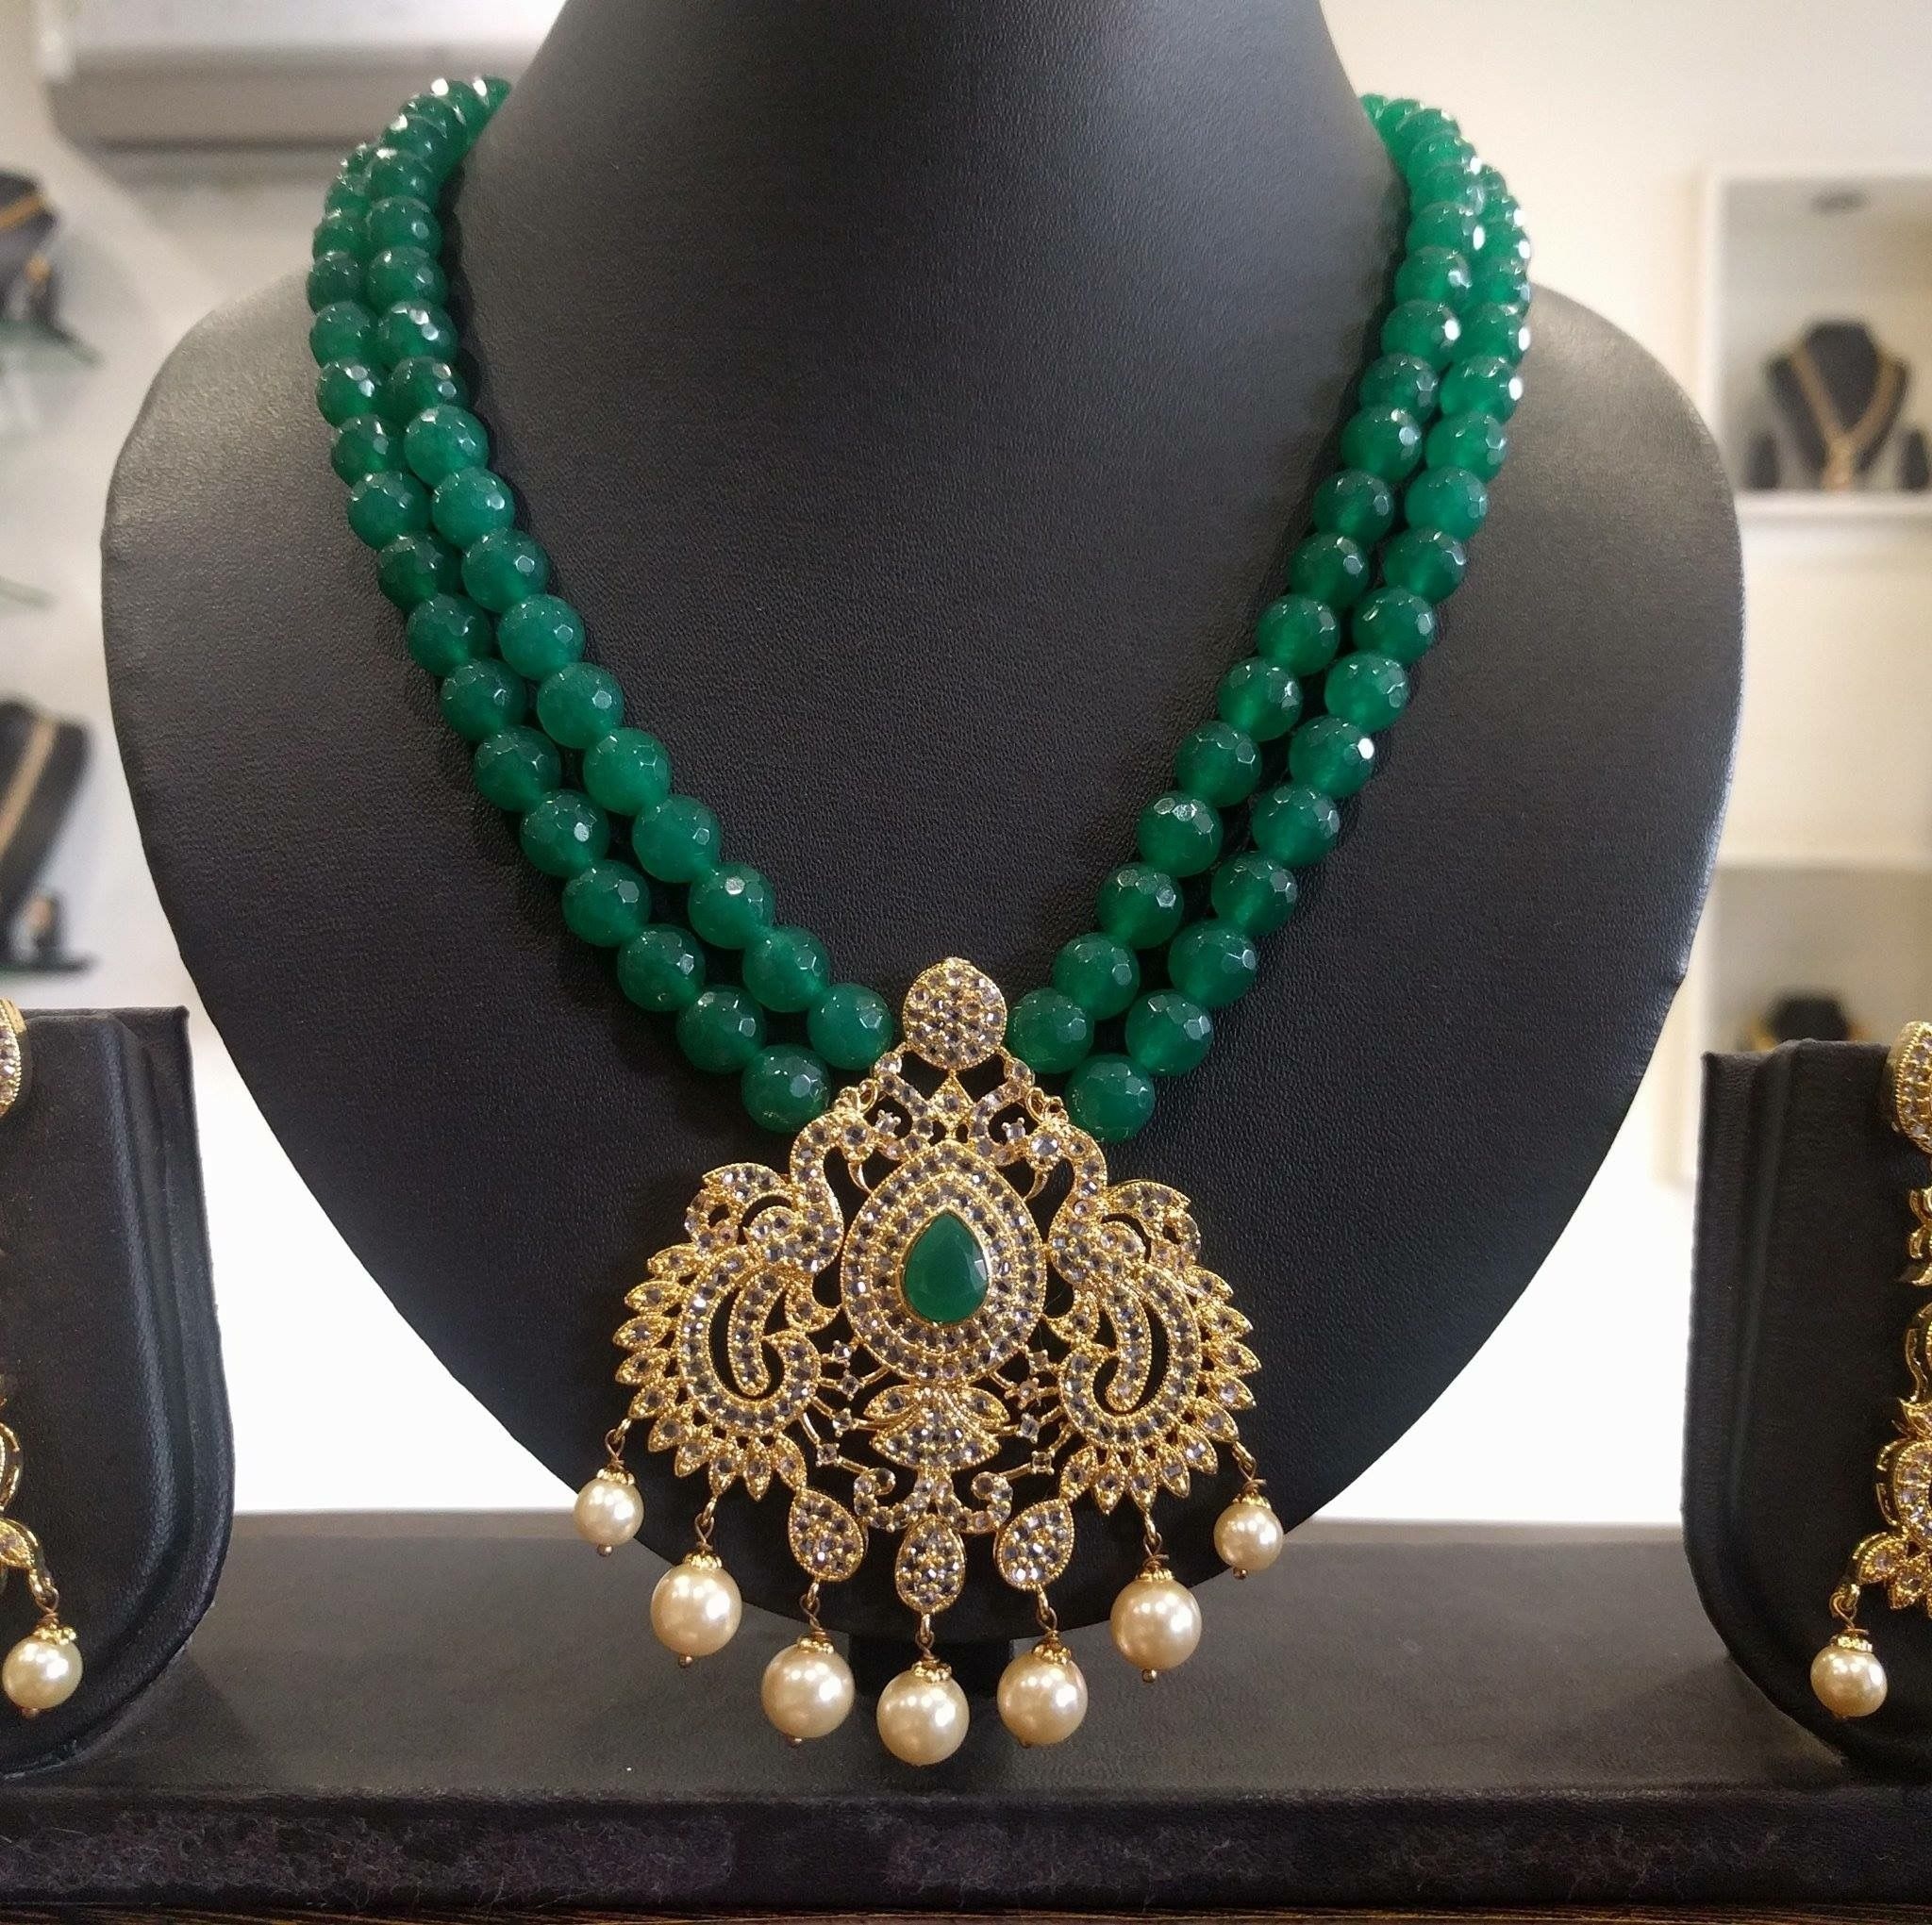 30 Emerald beads Necklace designs! Fashionworldhub